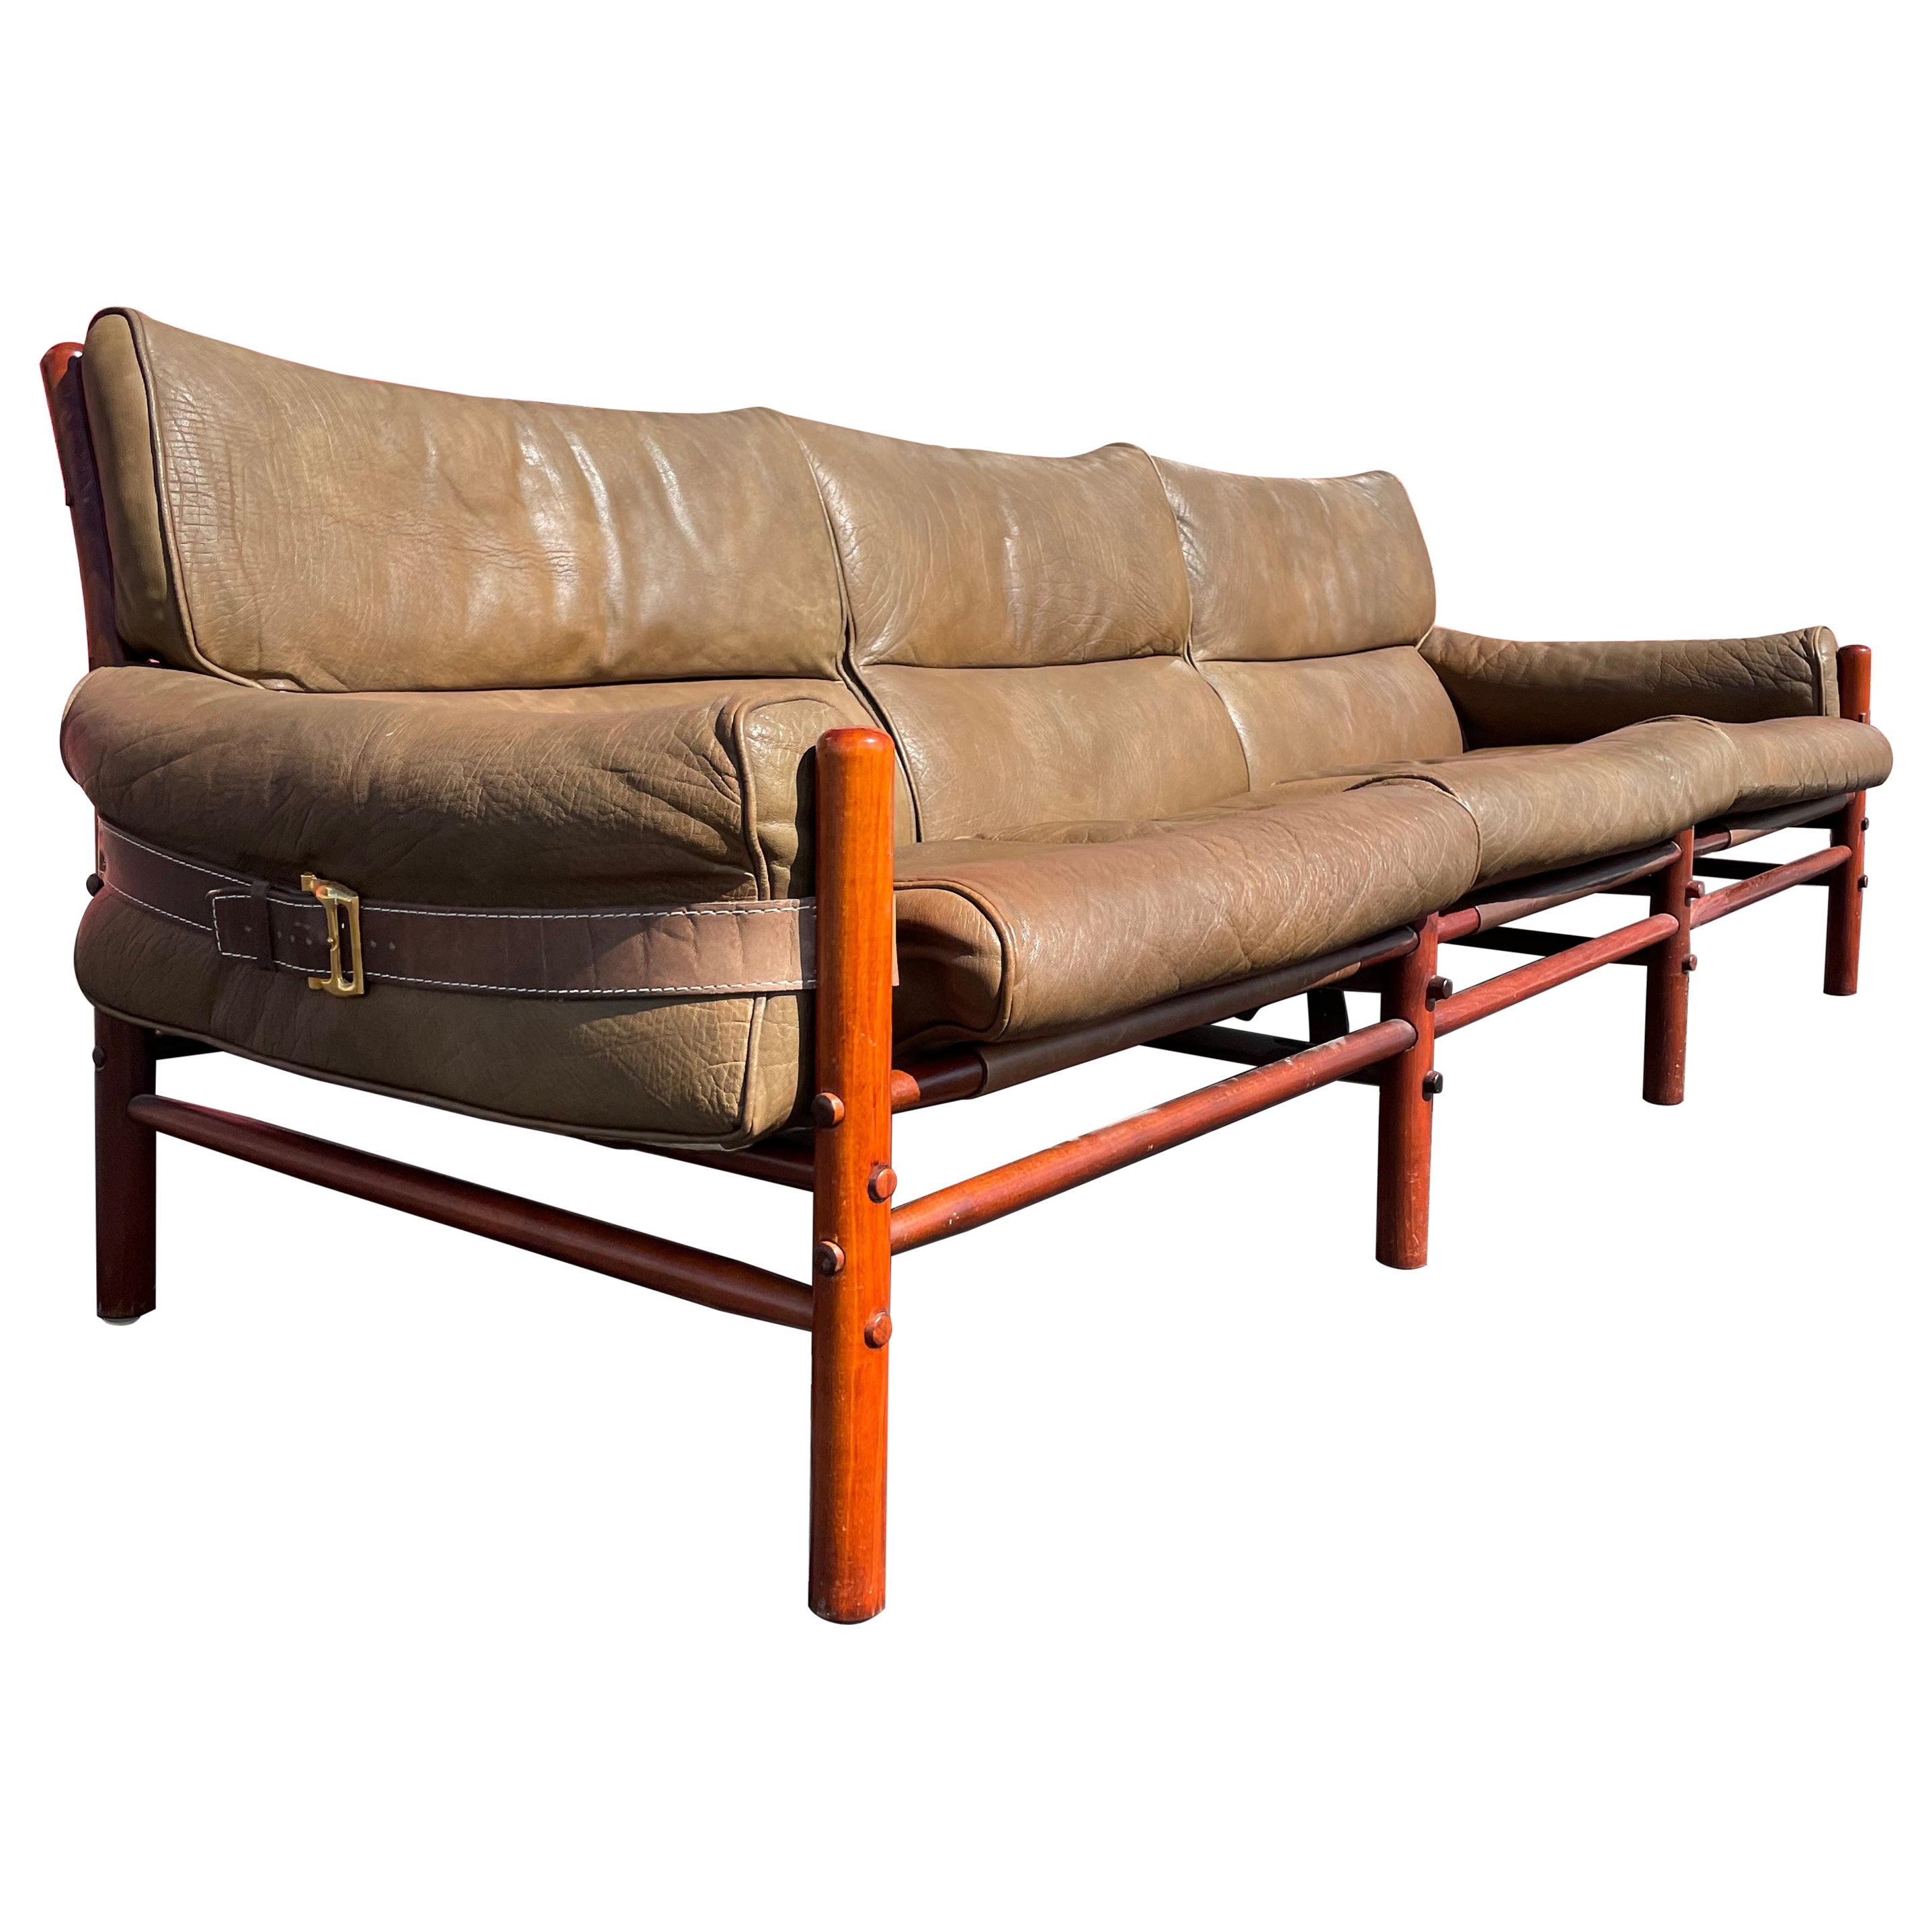 Arne Norell “Kontiki” Safari Leather Sofa For Sale